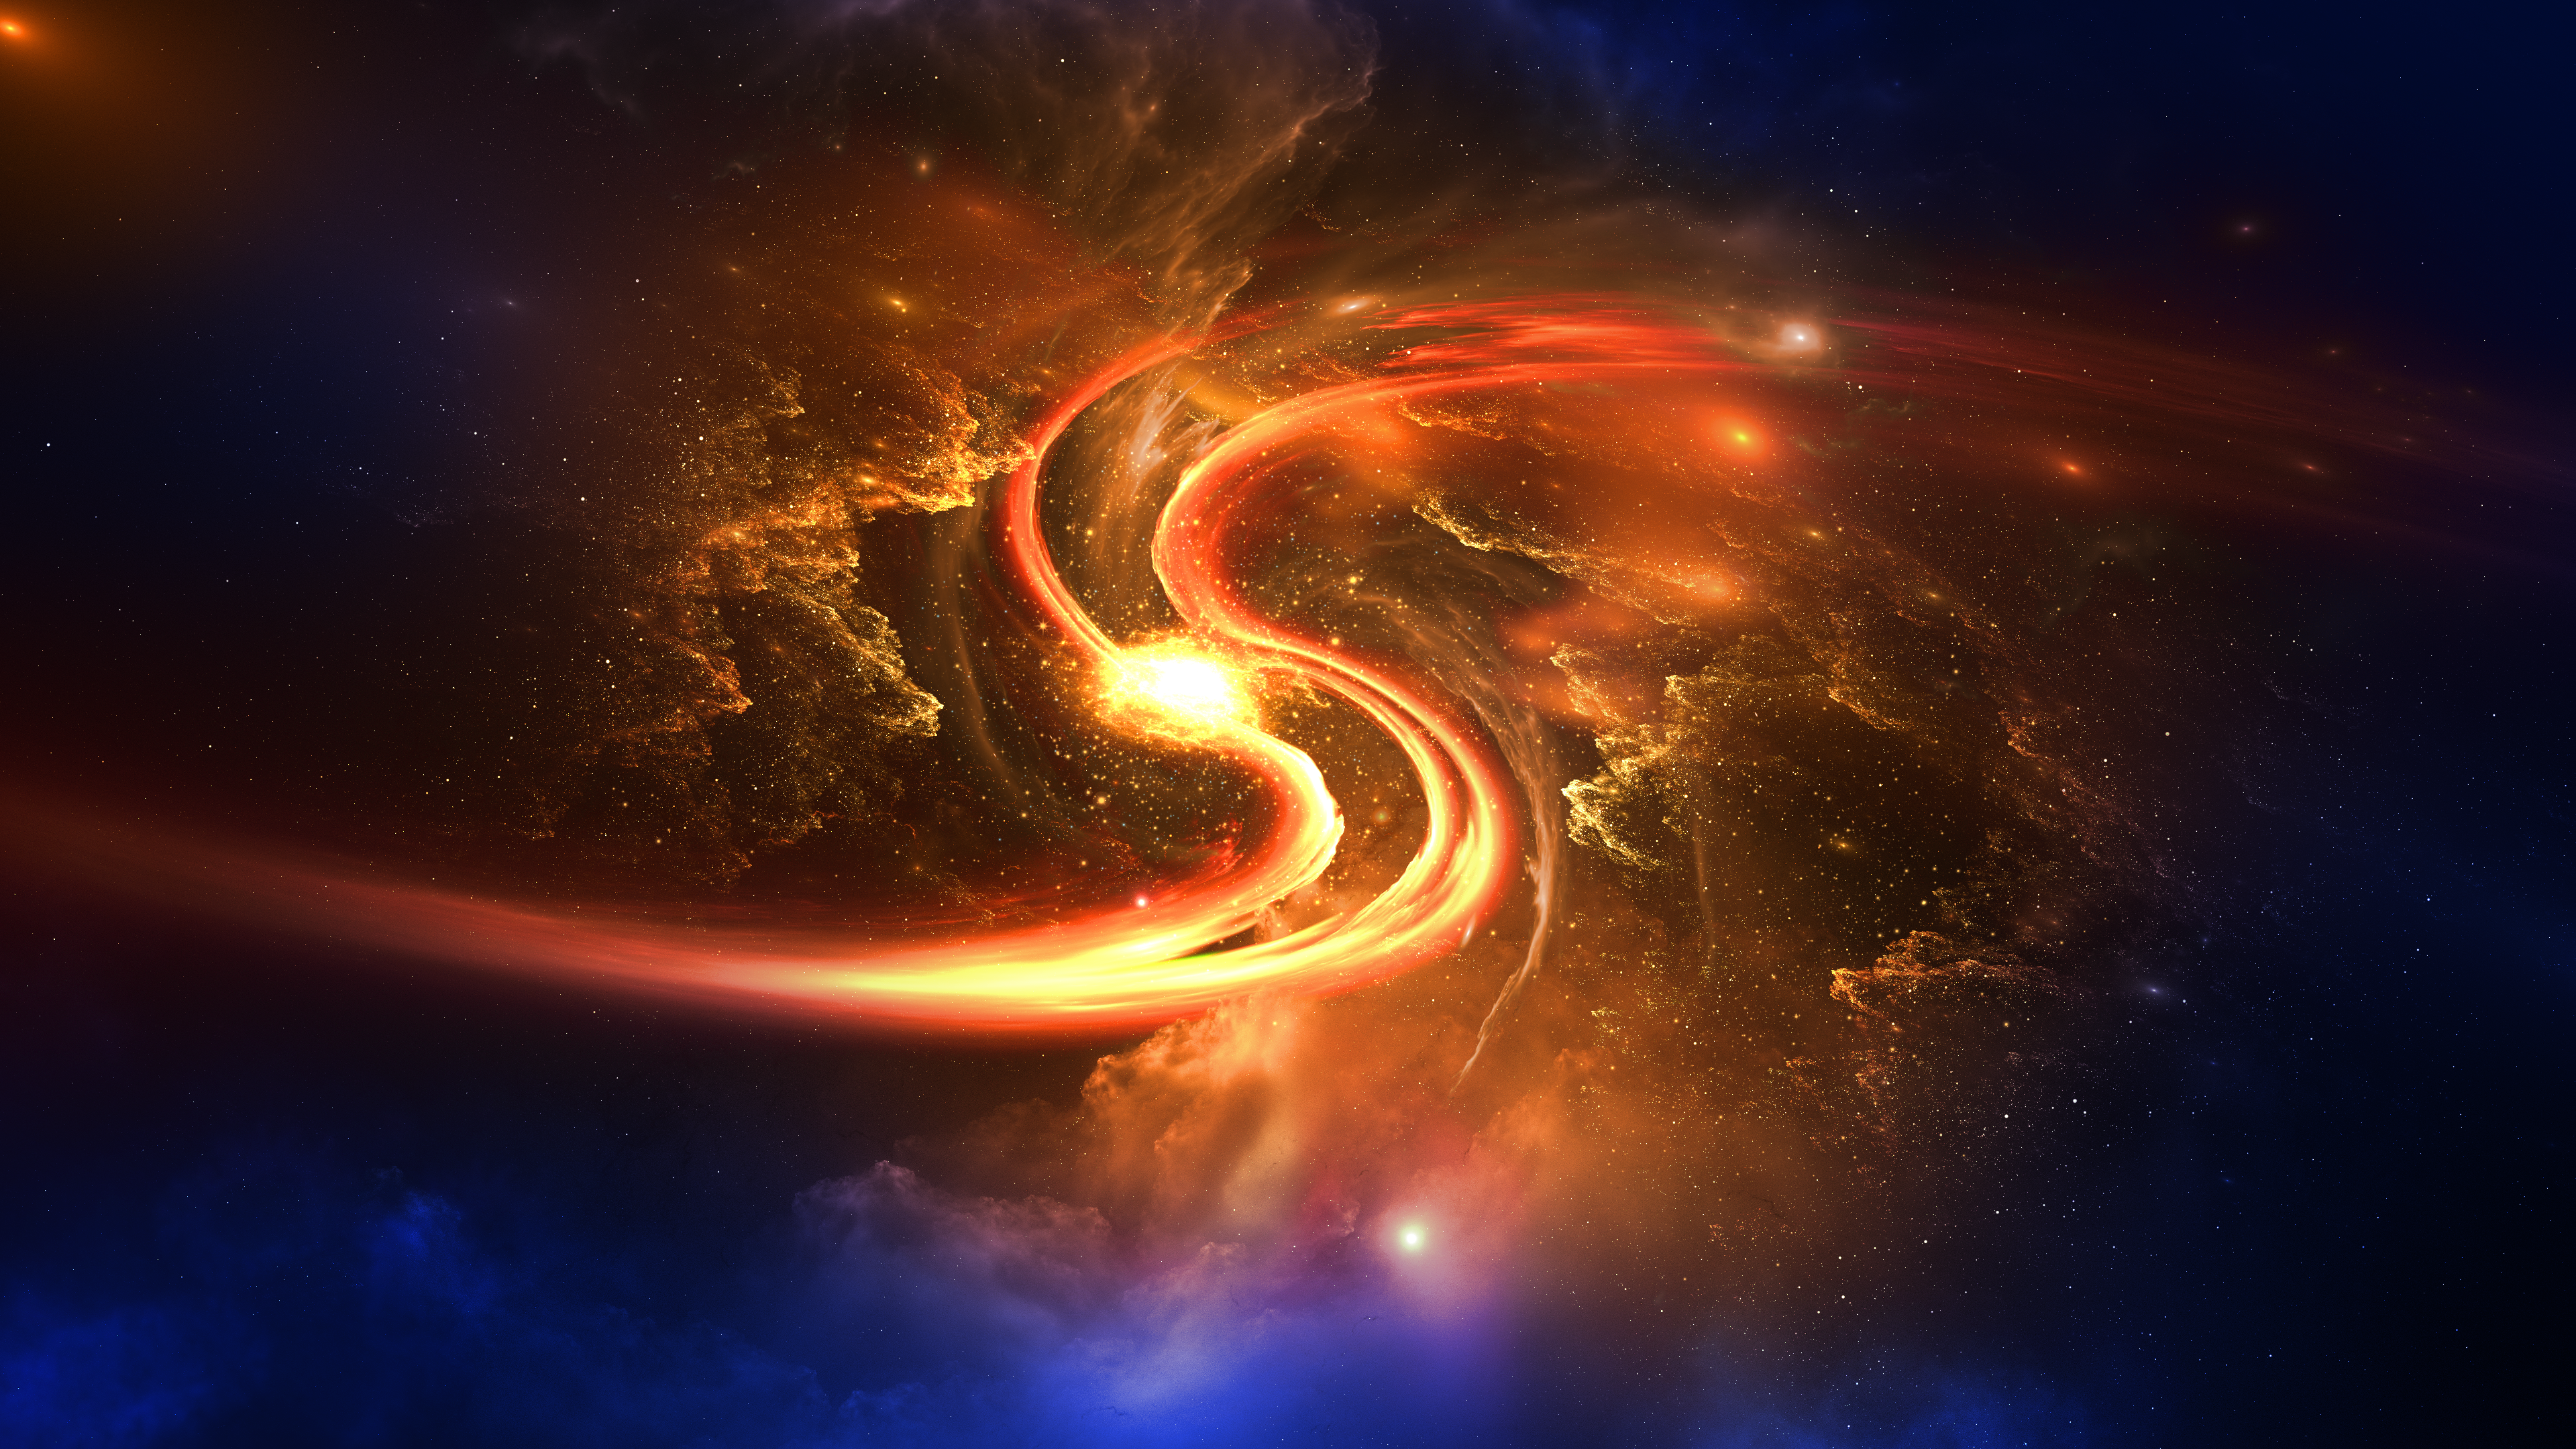 Hypnoshot Digital Digital Art Artwork Illustration Render Space Stars Planet Nebula Space Art Galaxy 3840x2160